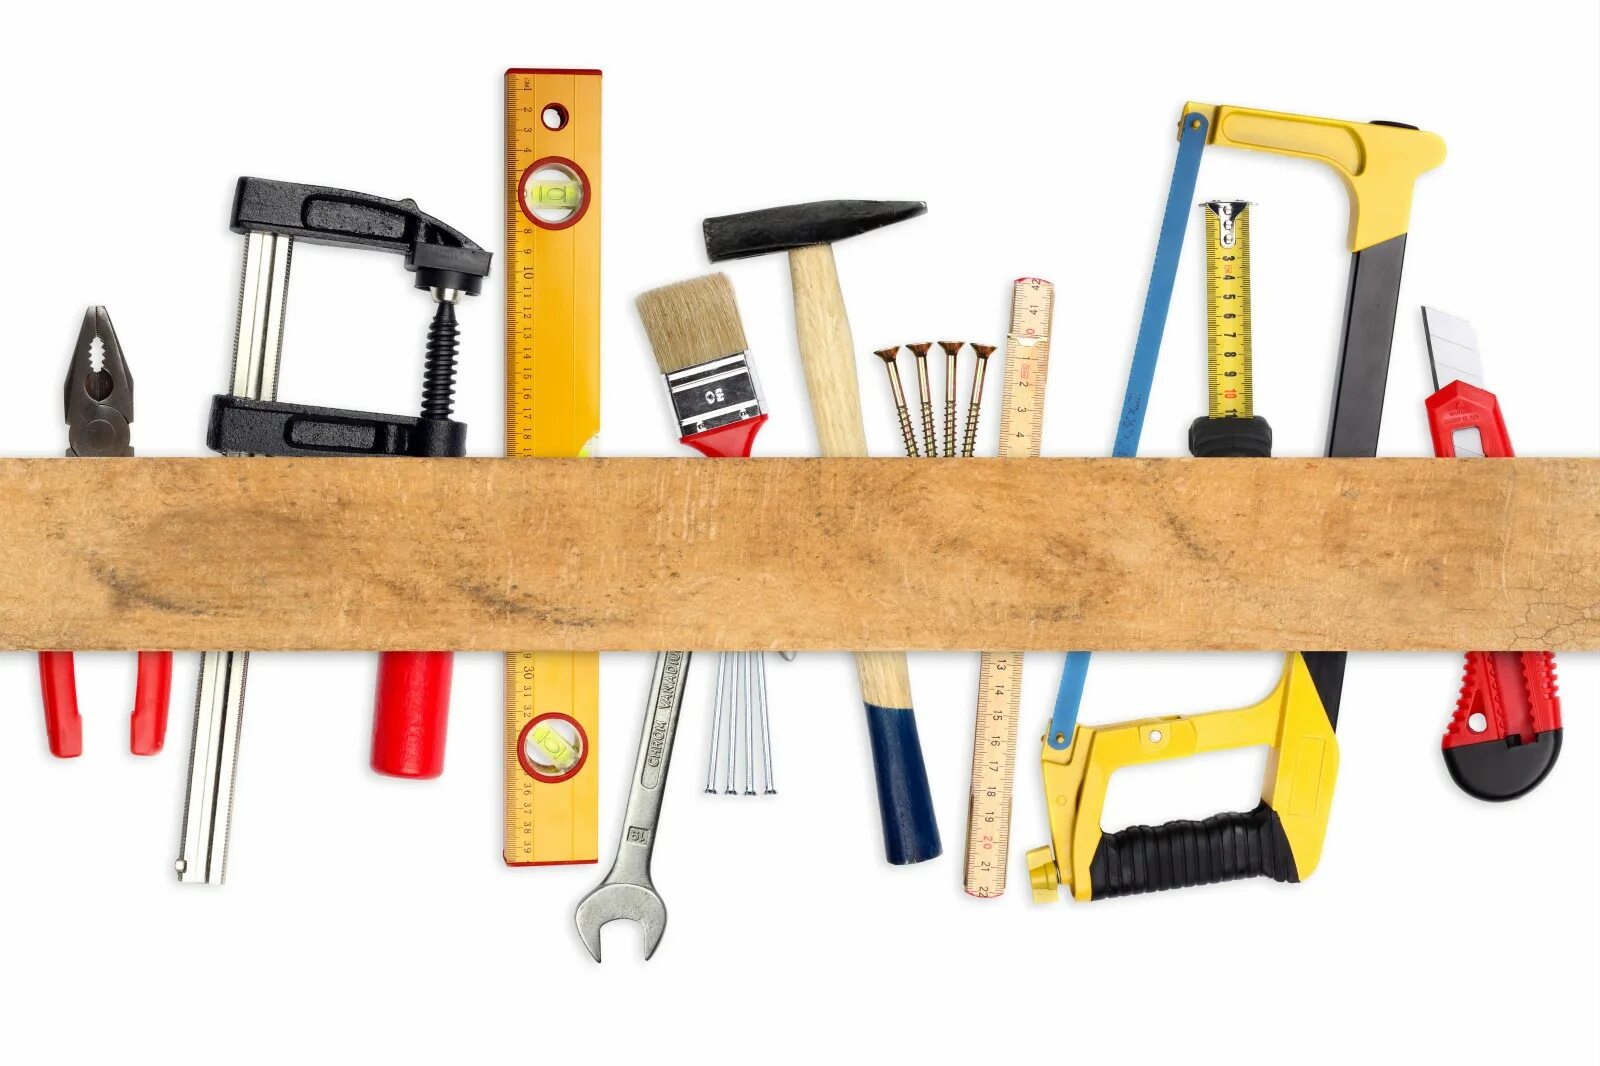 Tools sharing. Строительные инструменты. Инструменты для стройки. Стройматериалы инструменты строительные. Рабочие инструменты.